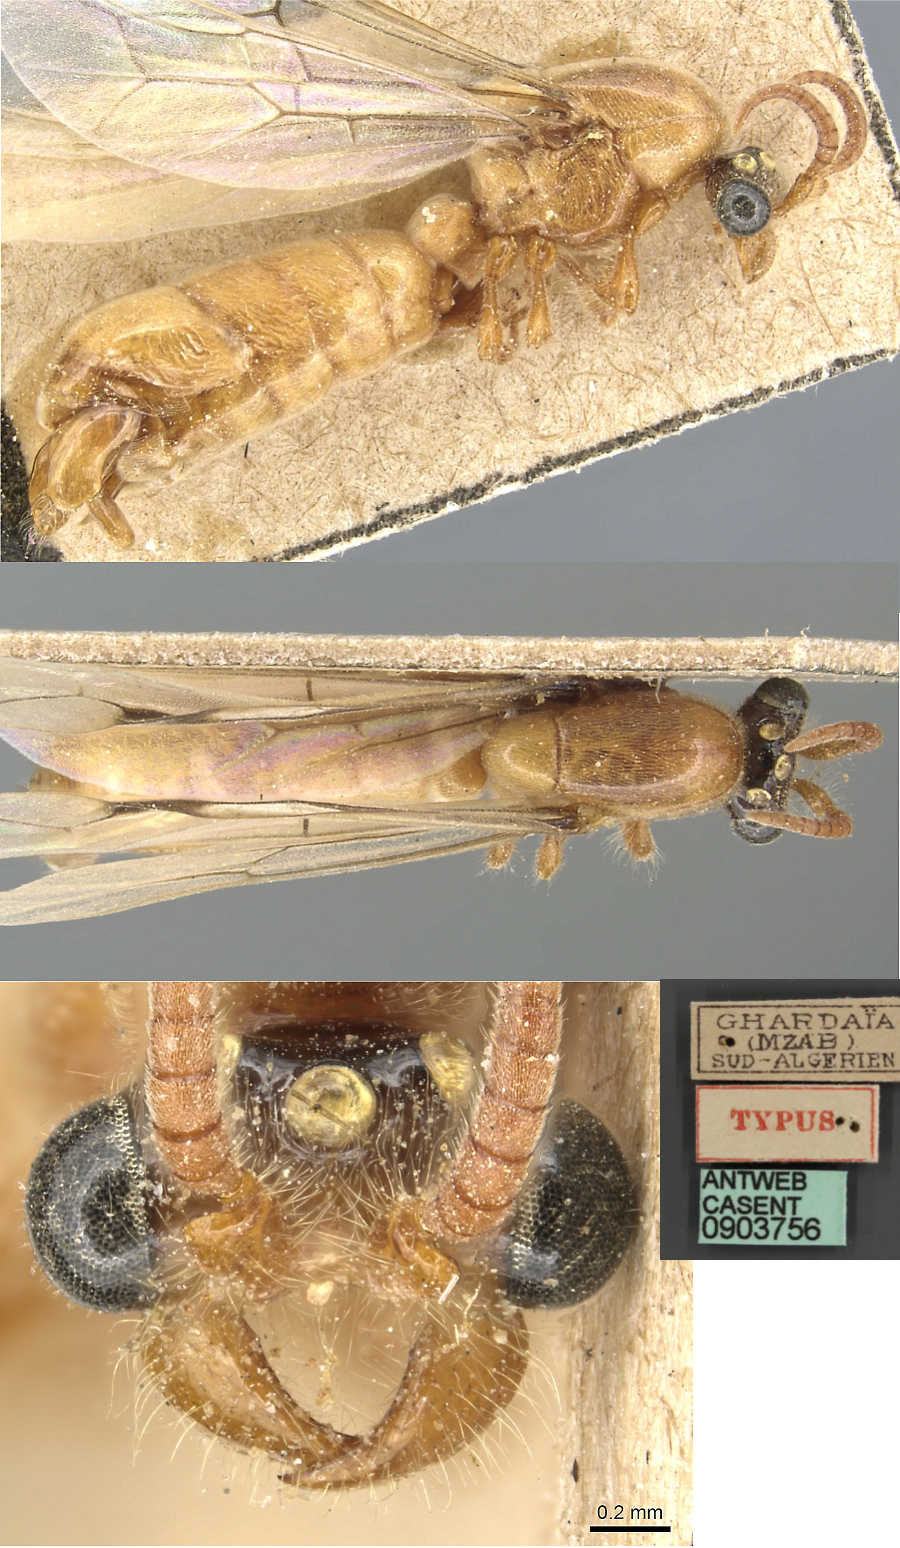 Aenictus hamifer male